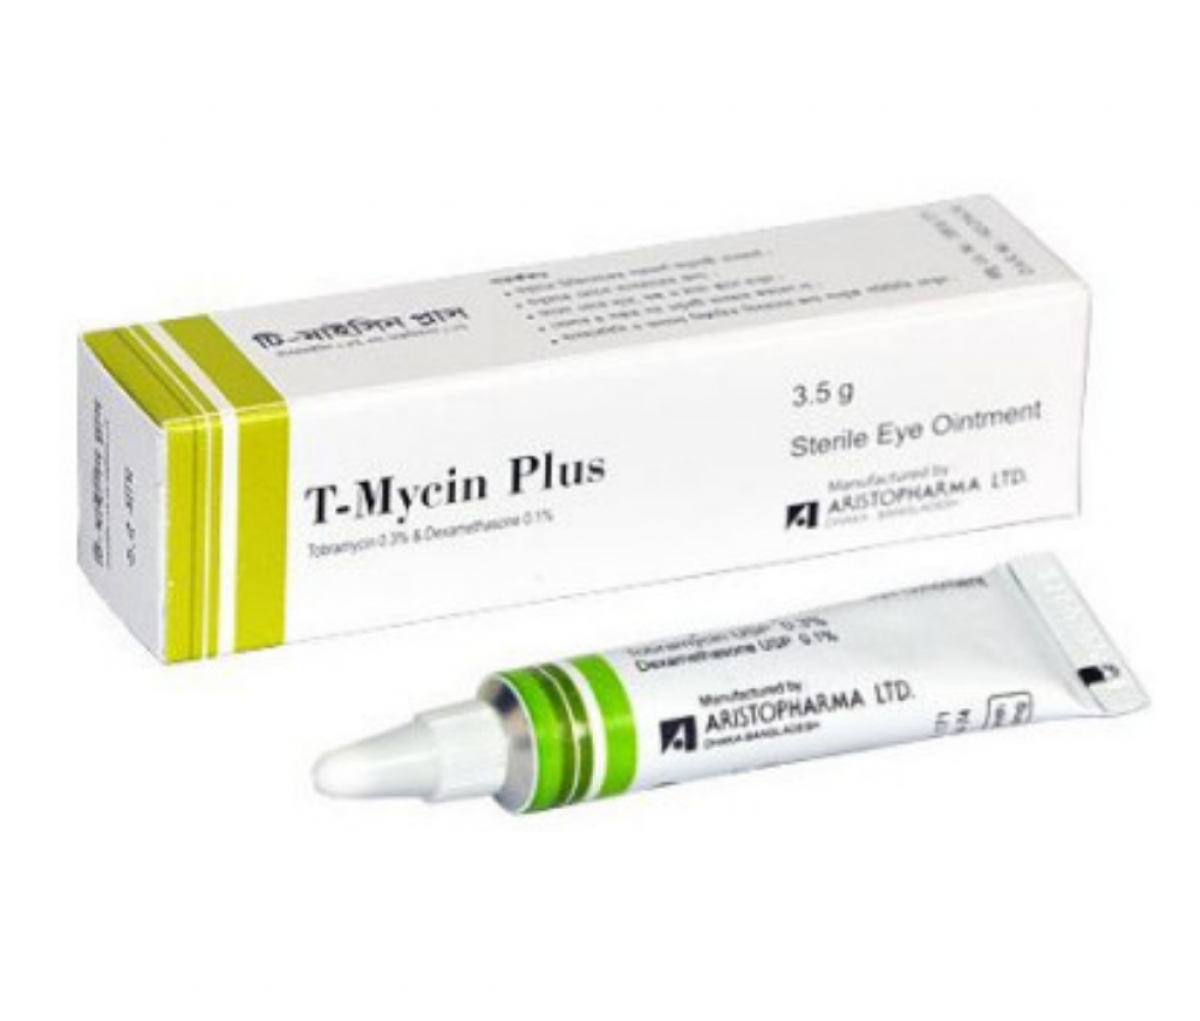 T-Mycin Plus Ophthalmic Solution